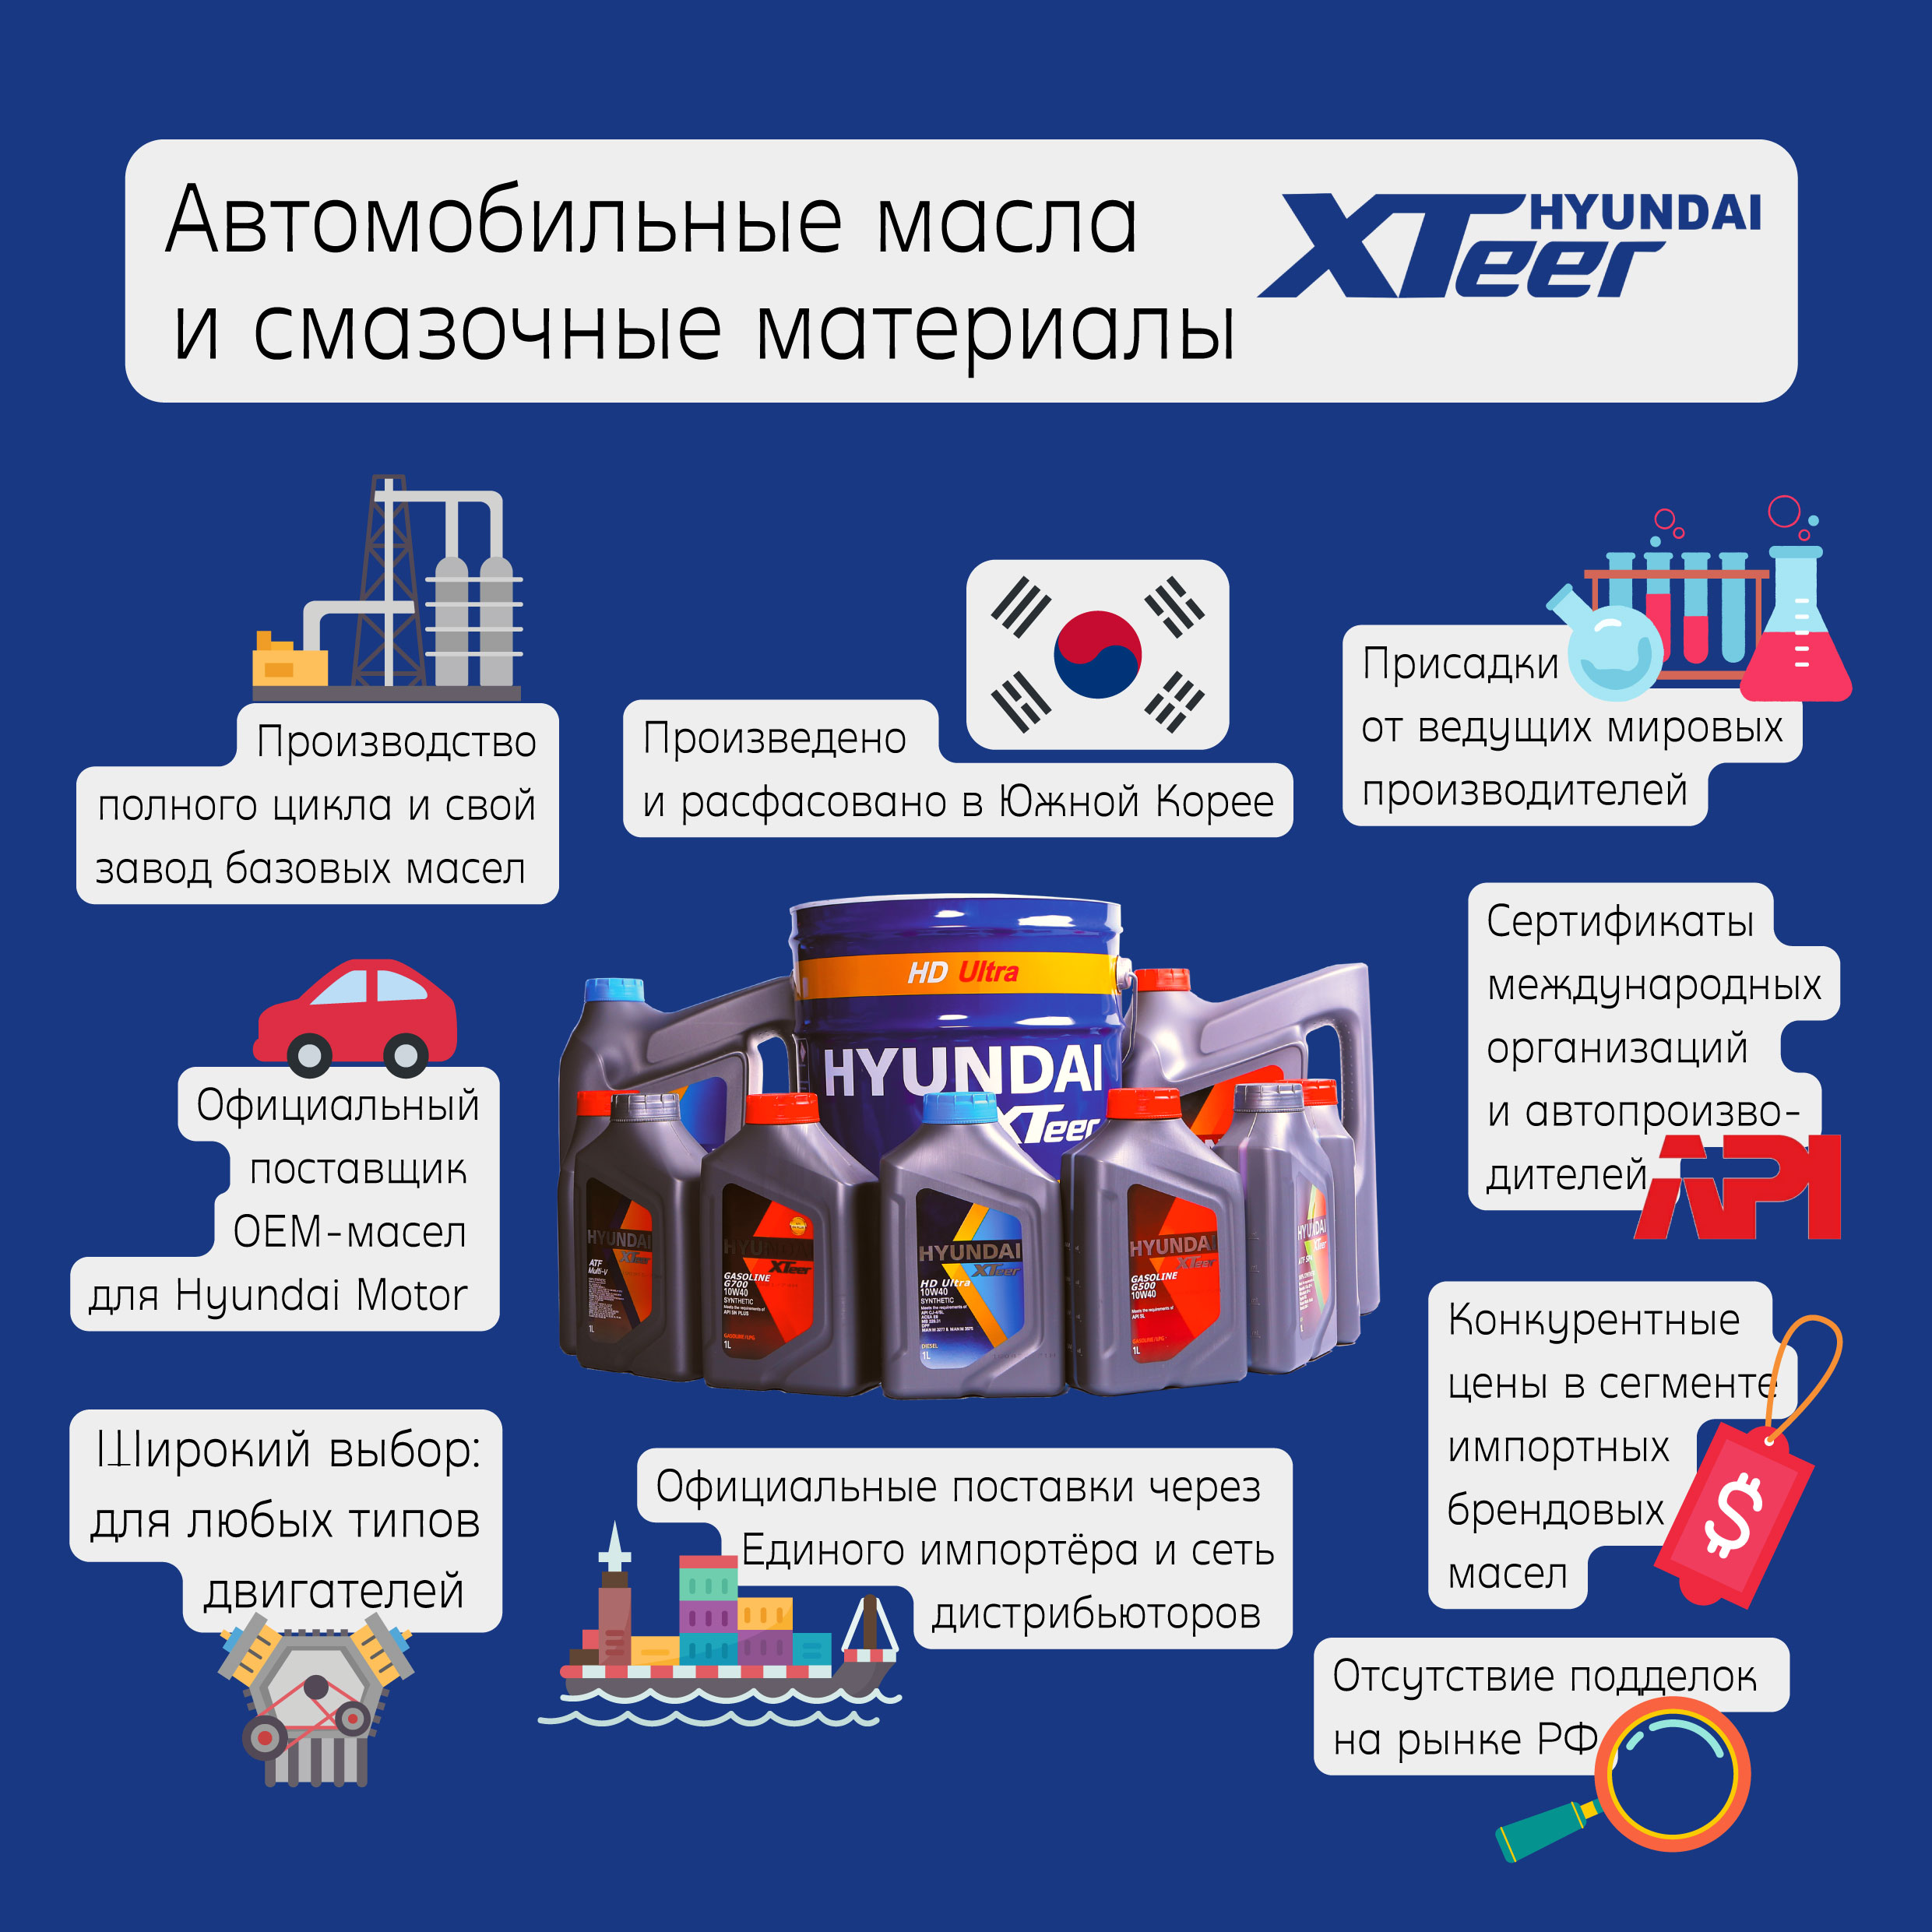 Preimushestva-Hyundai-XTeer-2023